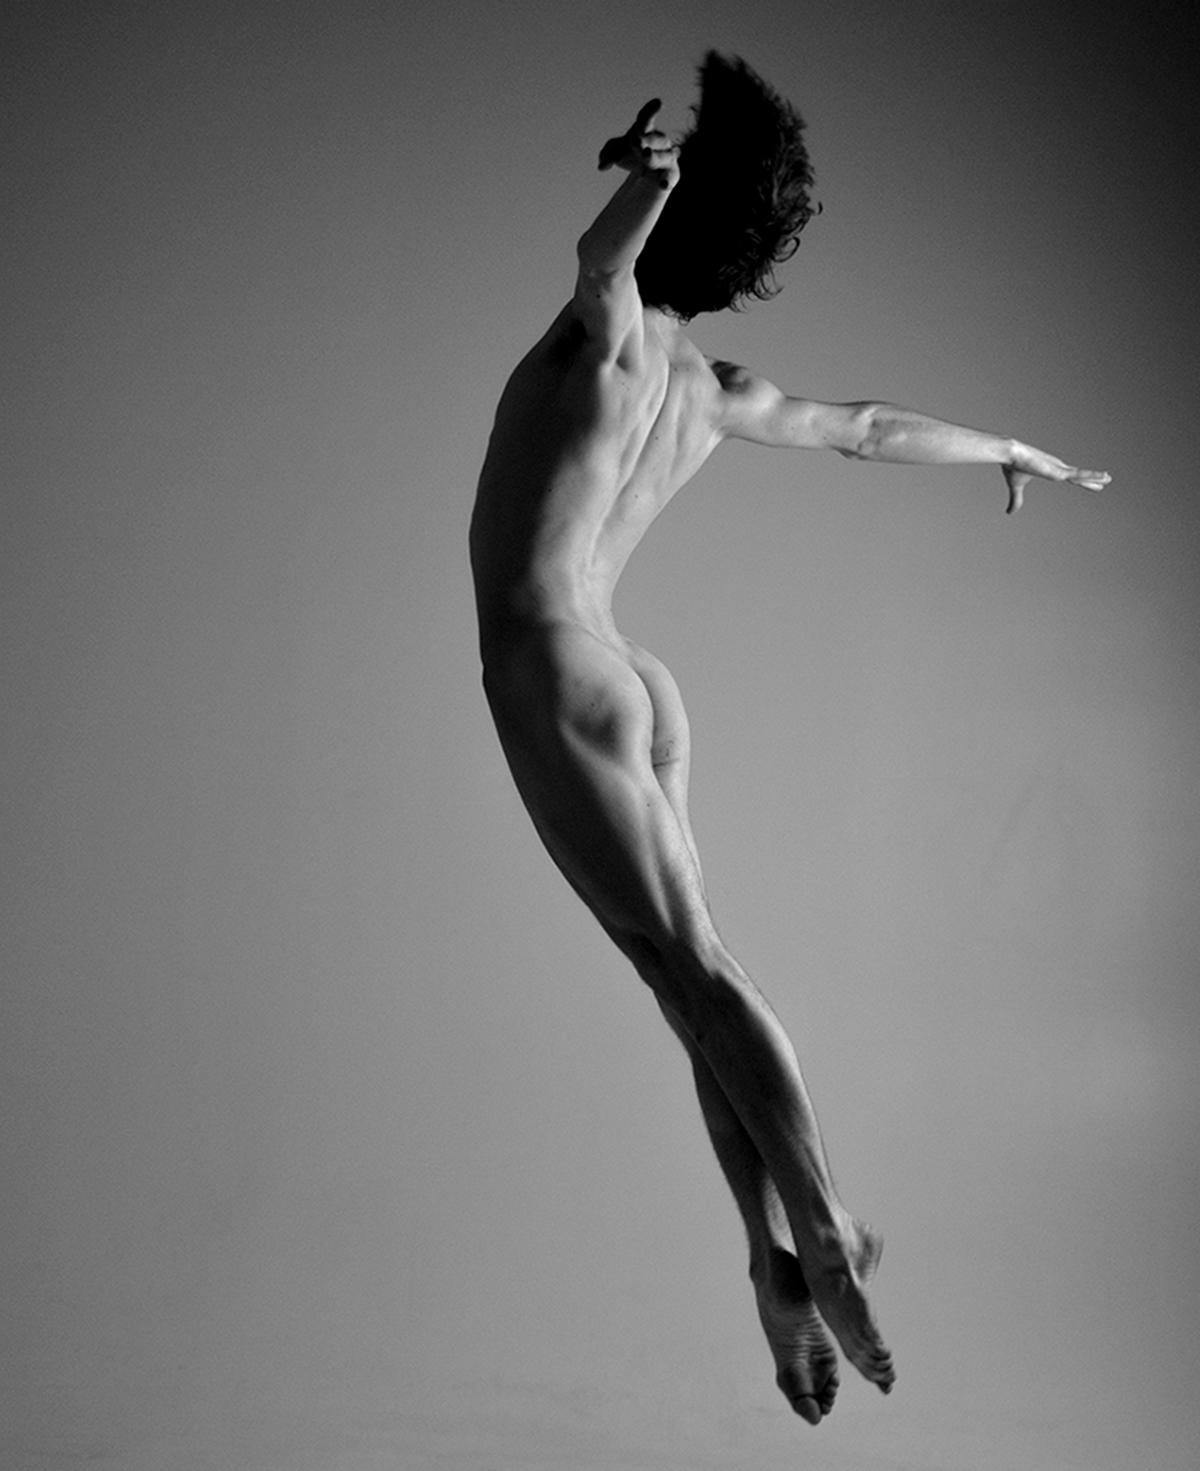 Apertura II. The Bailarín, series. Male Nude dancer Black & White photograph - Photograph by Ricky Cohete